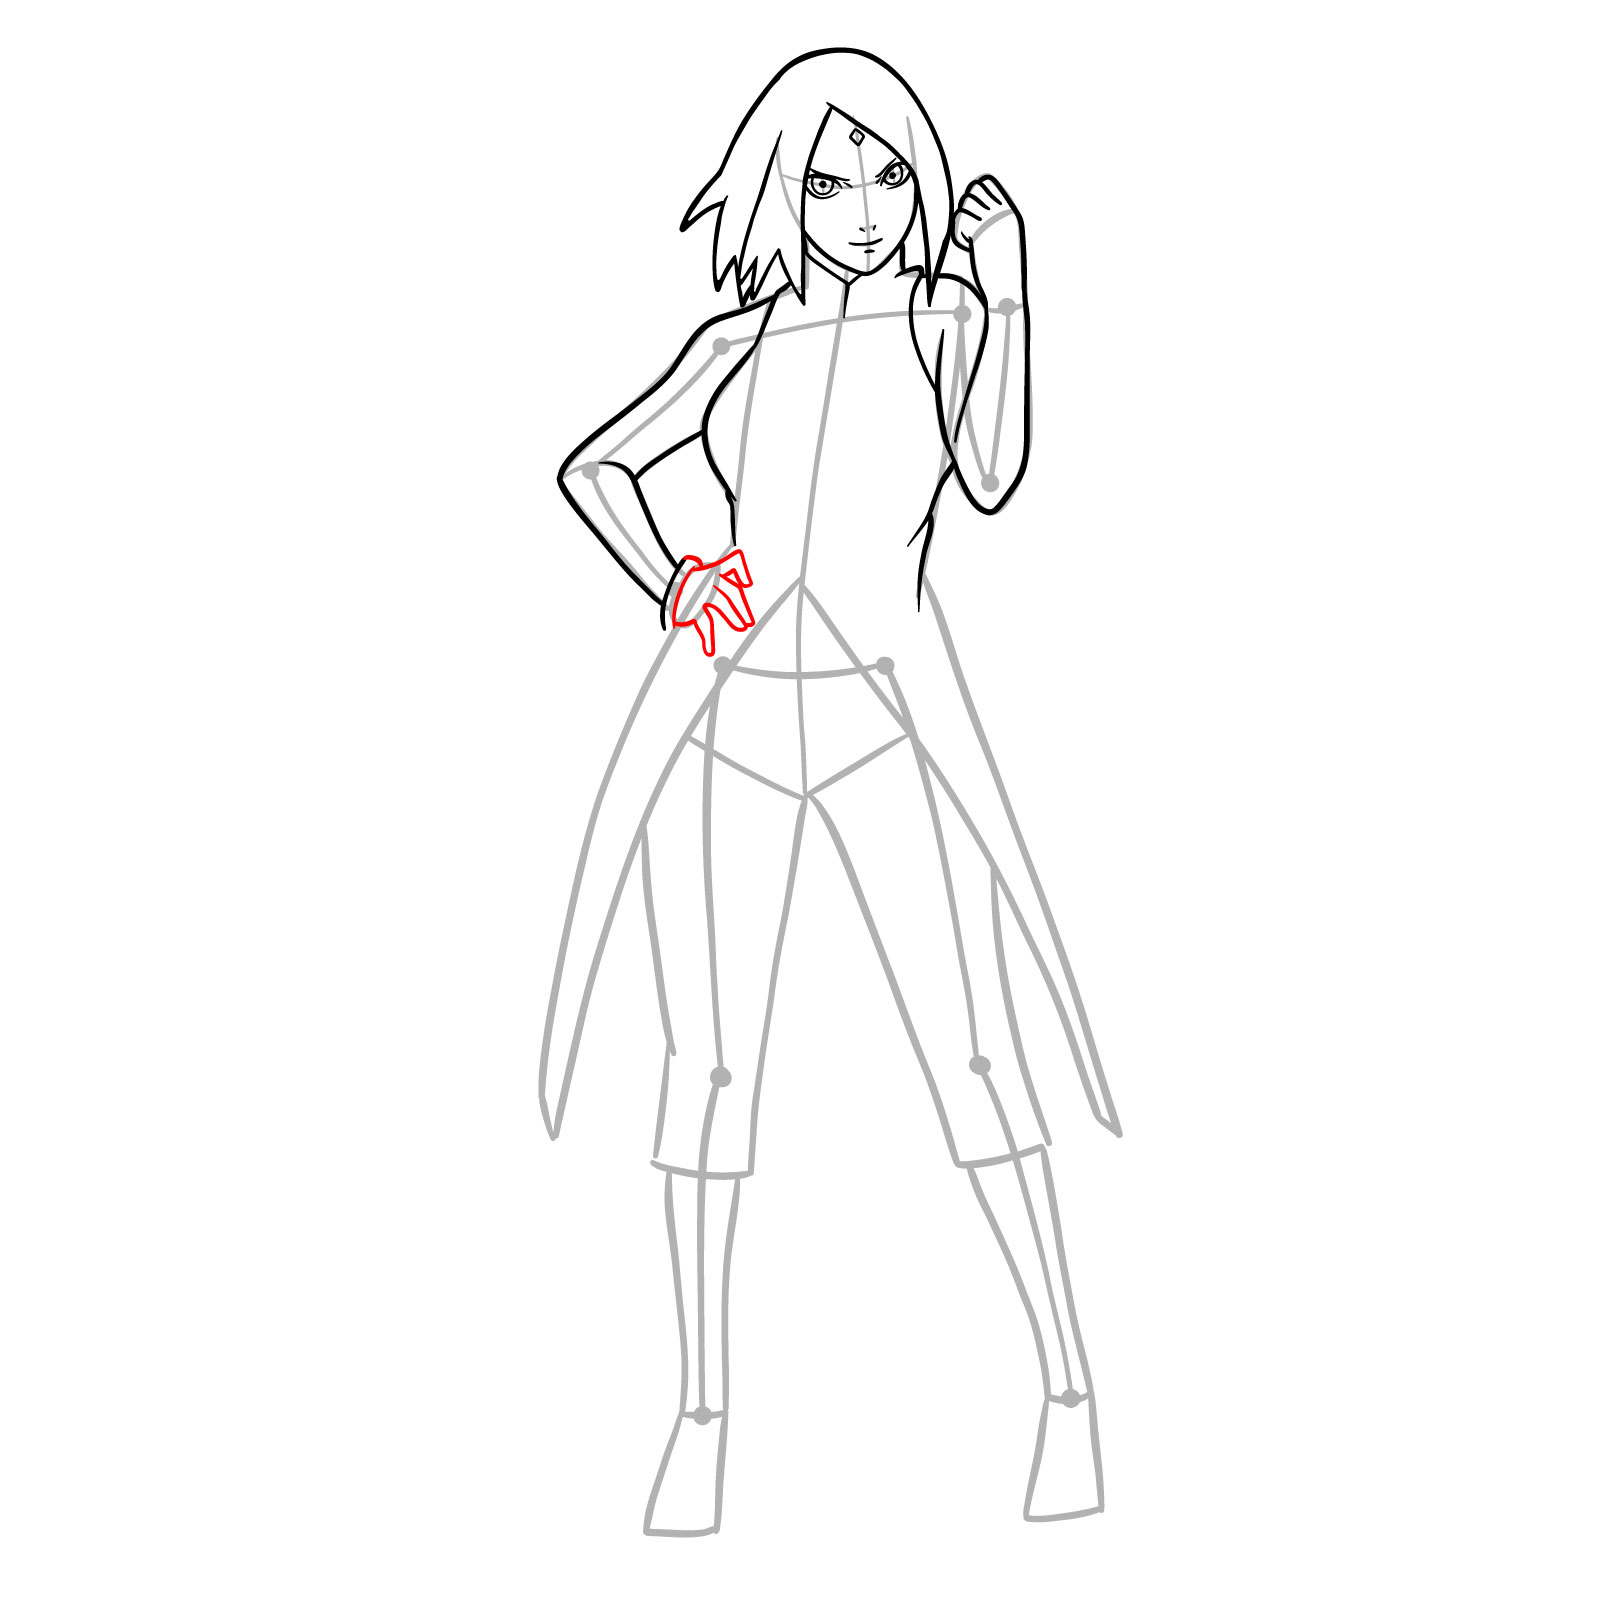 Sakura from Boruto full body drawing guide - step 15